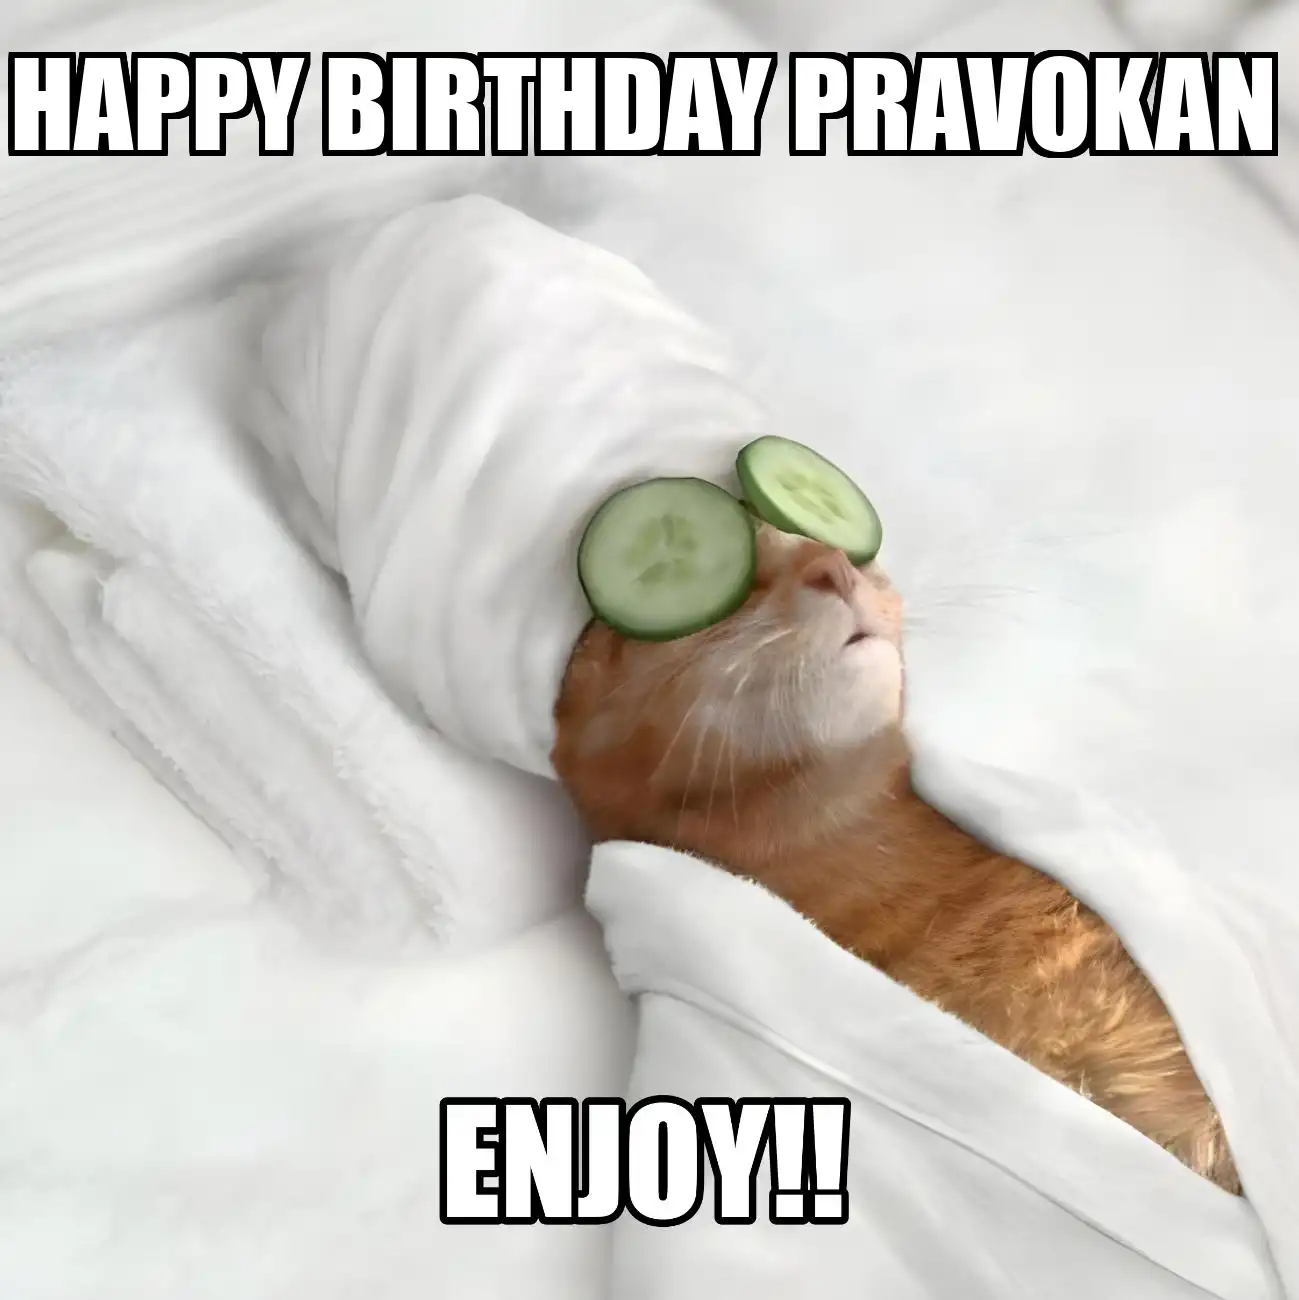 Happy Birthday Pravokan Enjoy Cat Meme